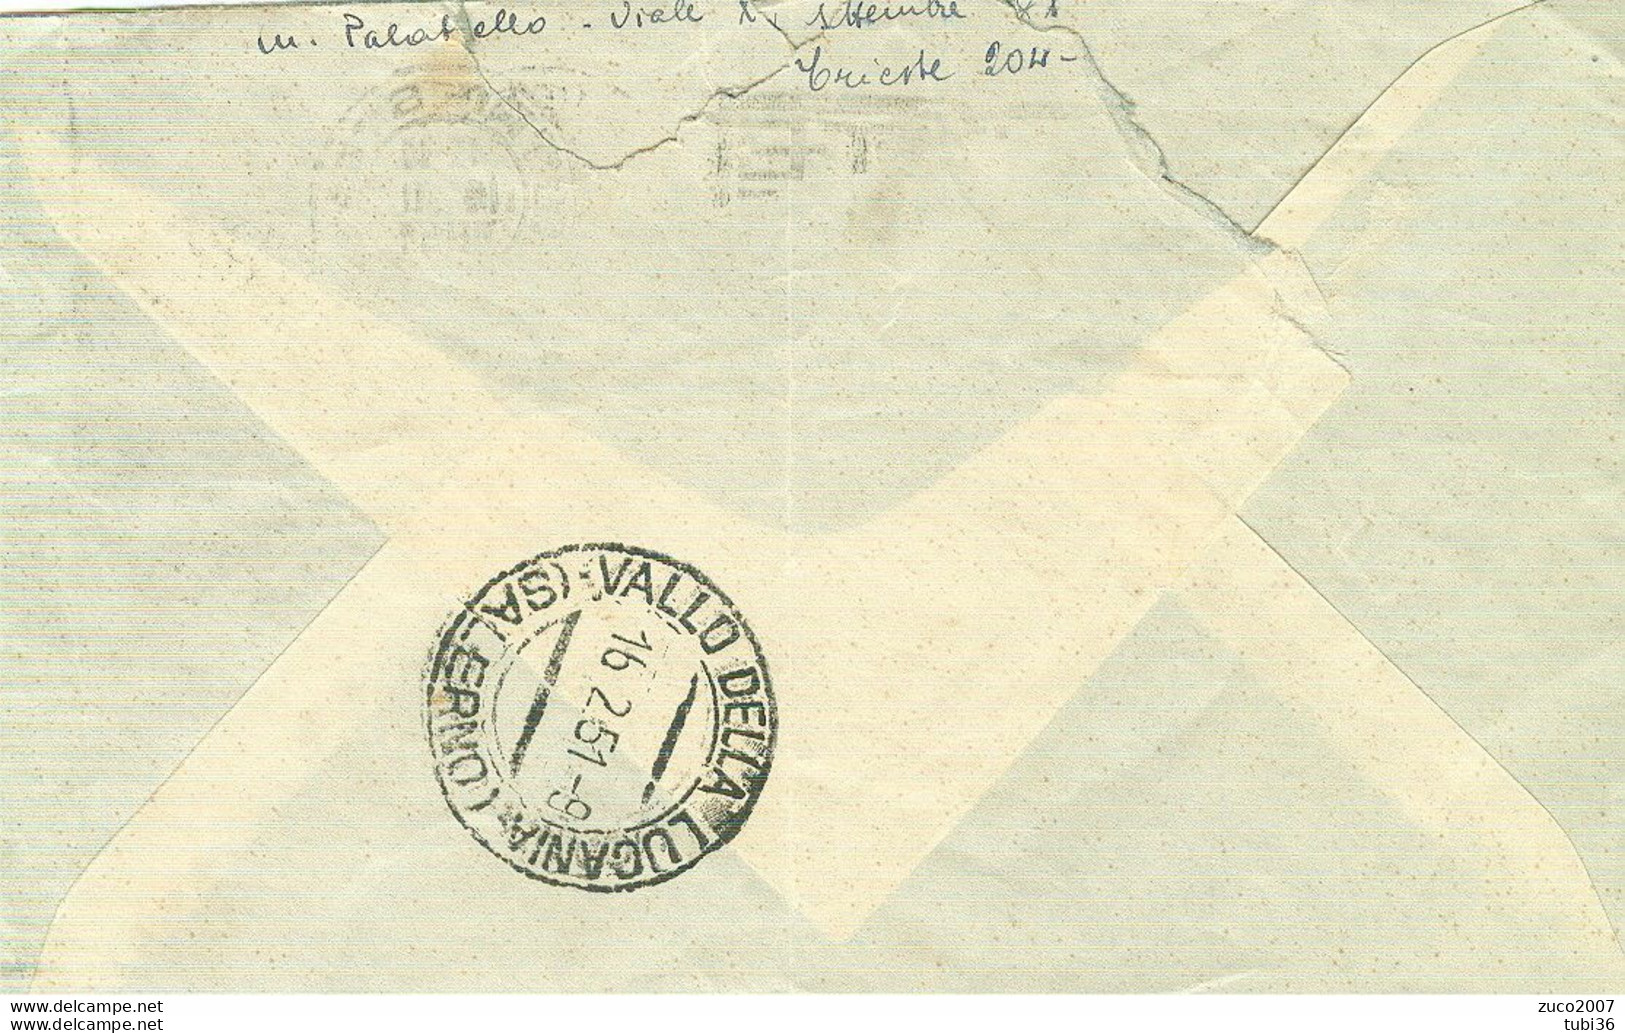 DEMOCRATICA £.20 AMG-FTT.-1951-TIMBRO POSTE TRIESTE TARGHETTA"DONATE SANGUE ALLA BANCA",VALLE DELLA LUCANIA (SALERNO) - Marcofilía